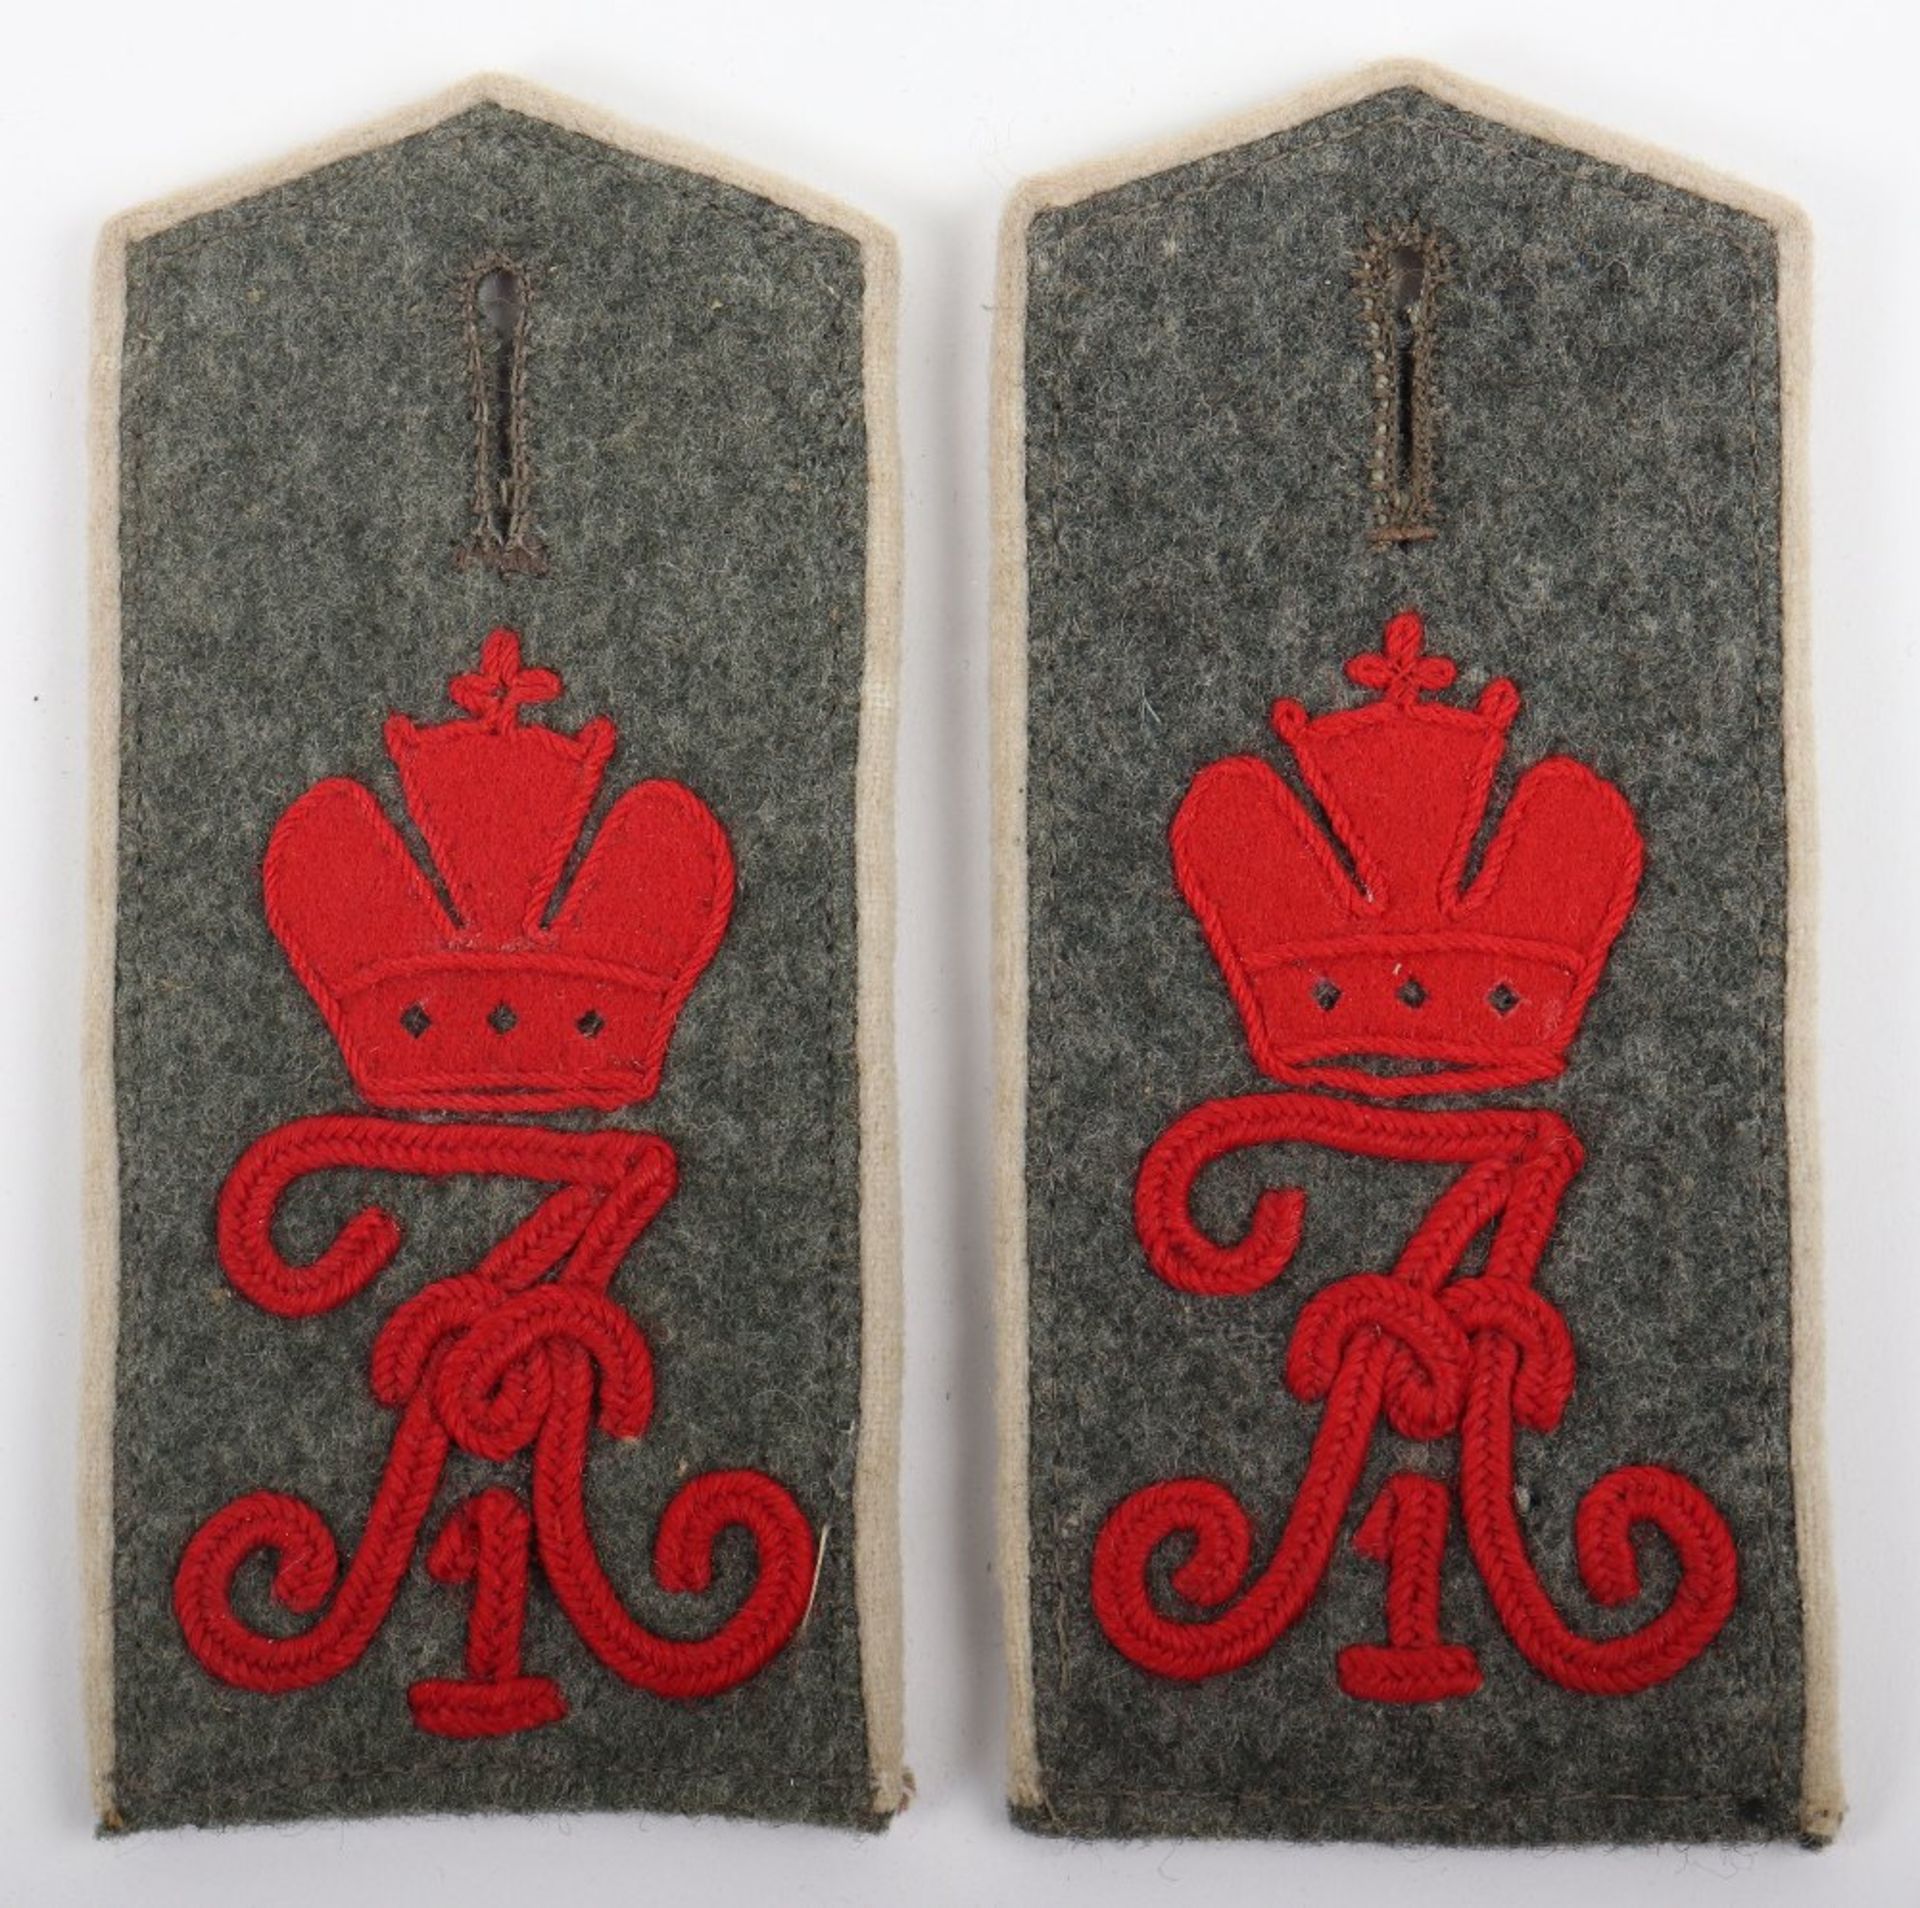 Matched Pair of Imperial German Kaiser Alexander Garde-Grenadier-Regiment Nr 1 M-1907 Shoulder Strap